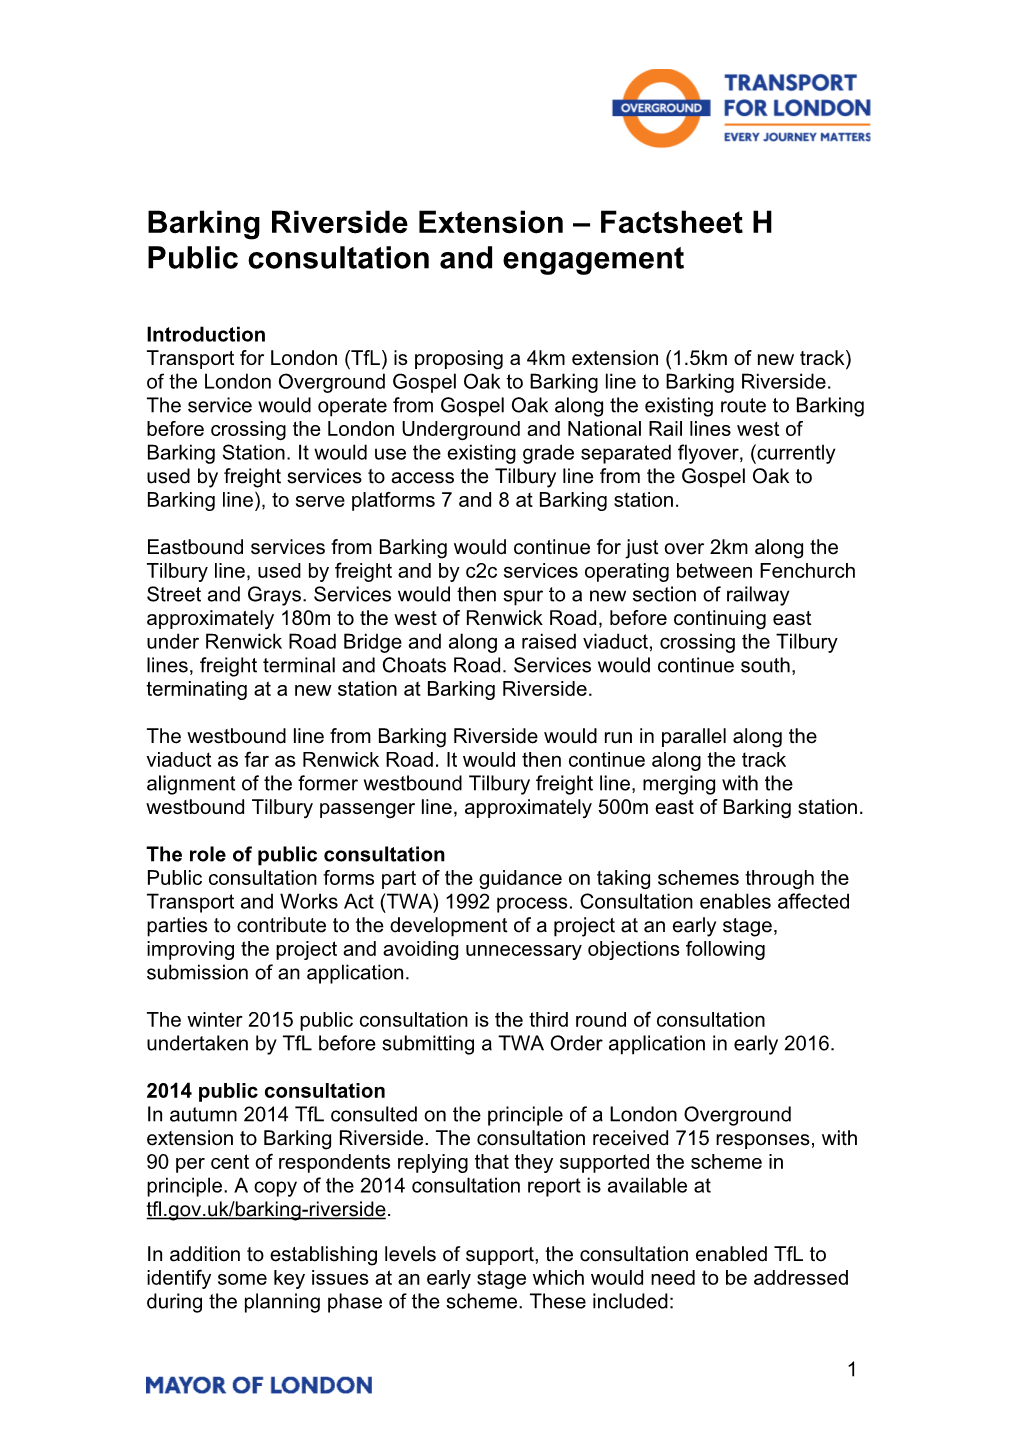 Barking Riverside Extension – Factsheet H Public Consultation and Engagement